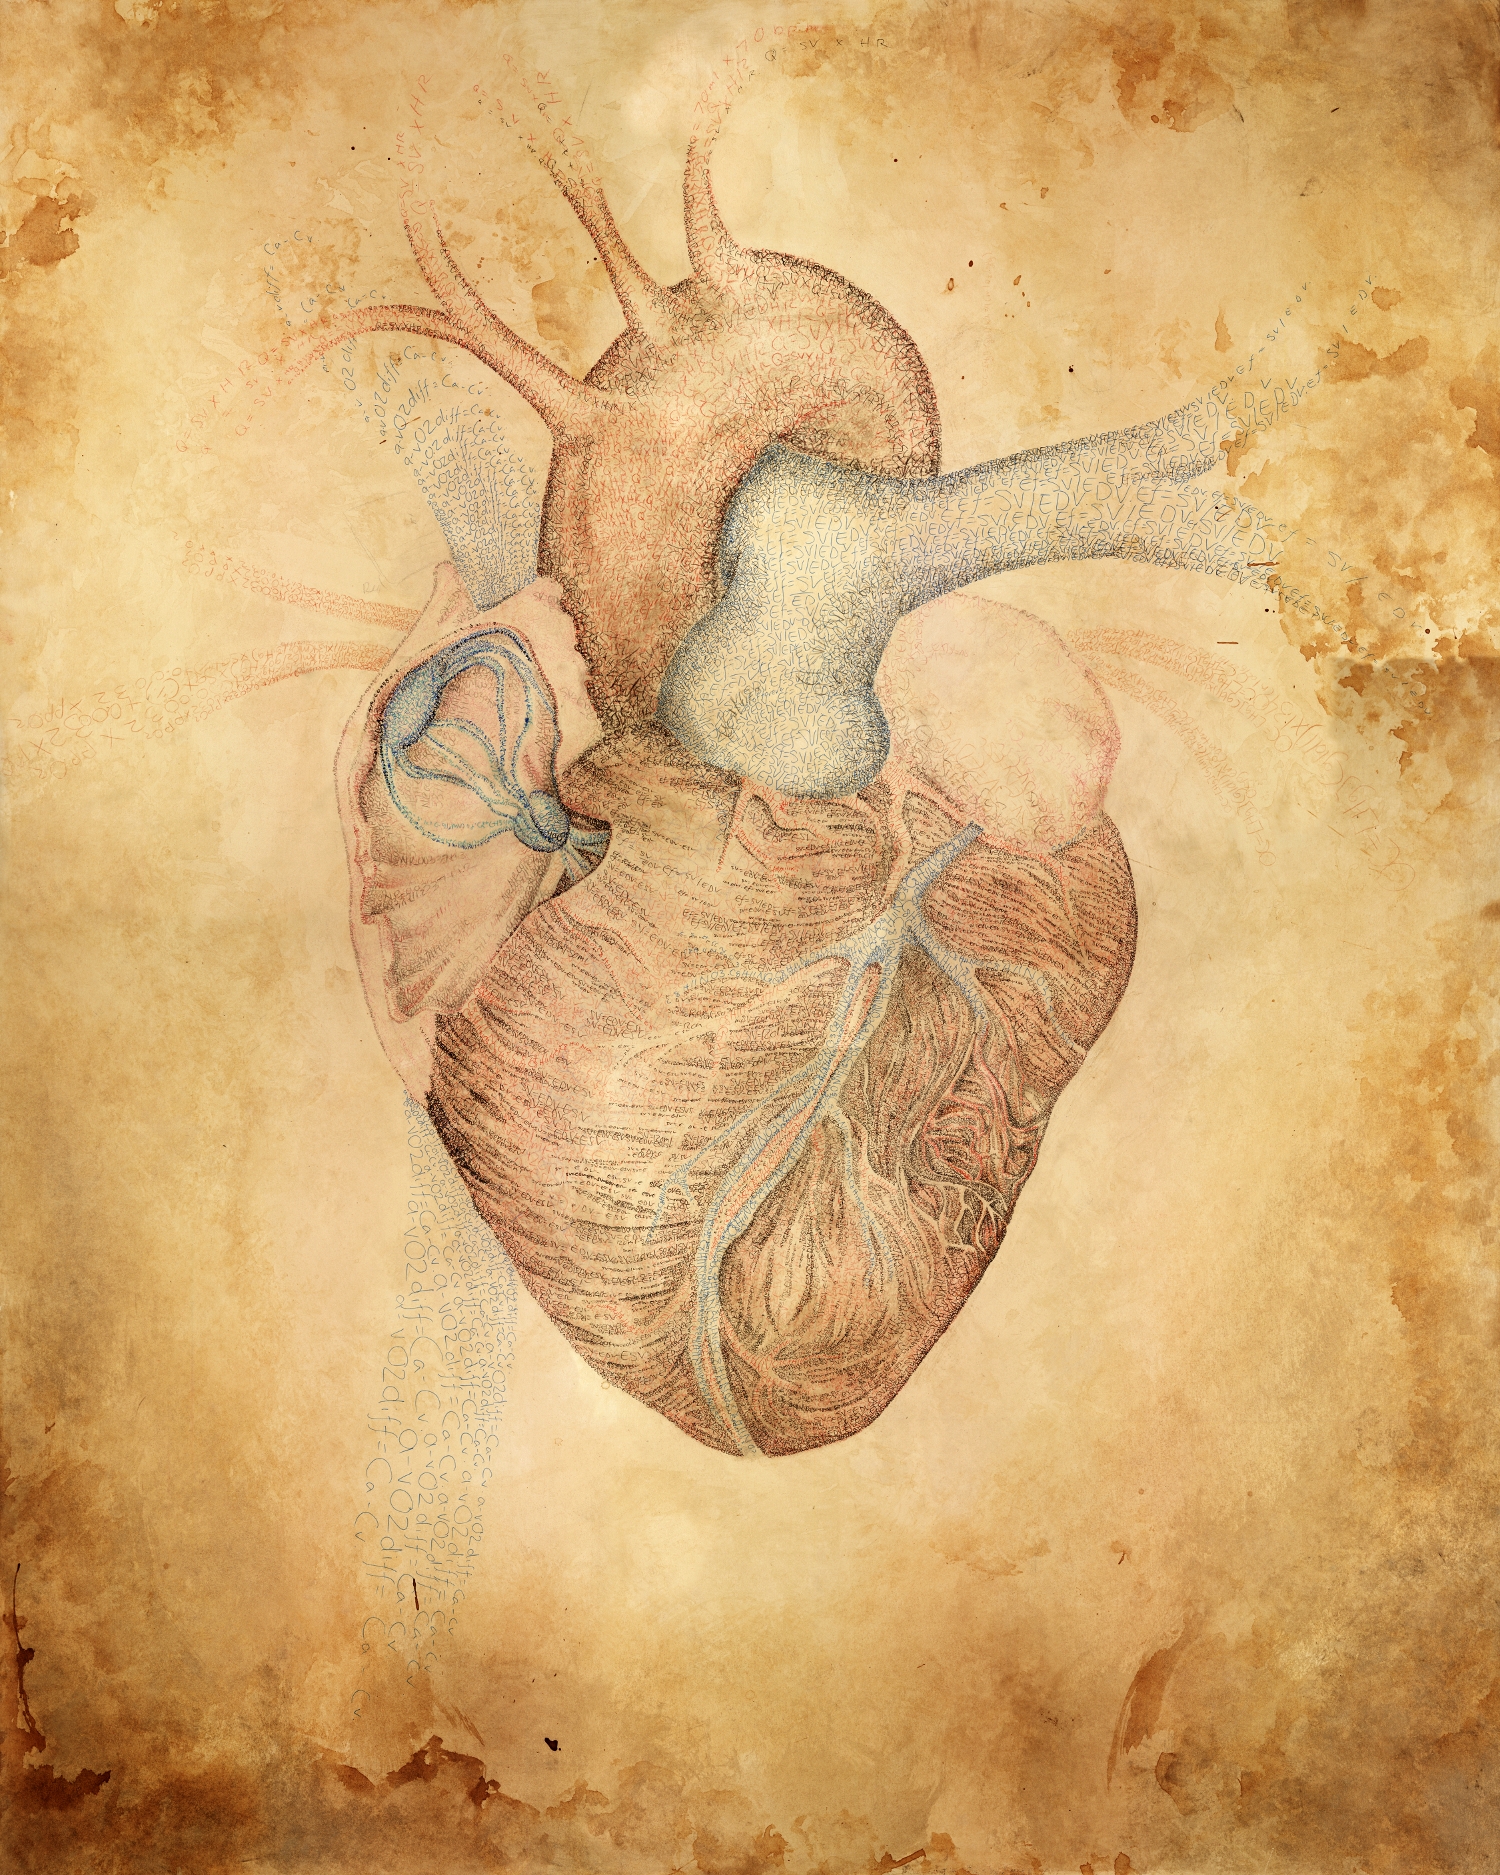 Human Heart Drawing - HD Photos Gallery